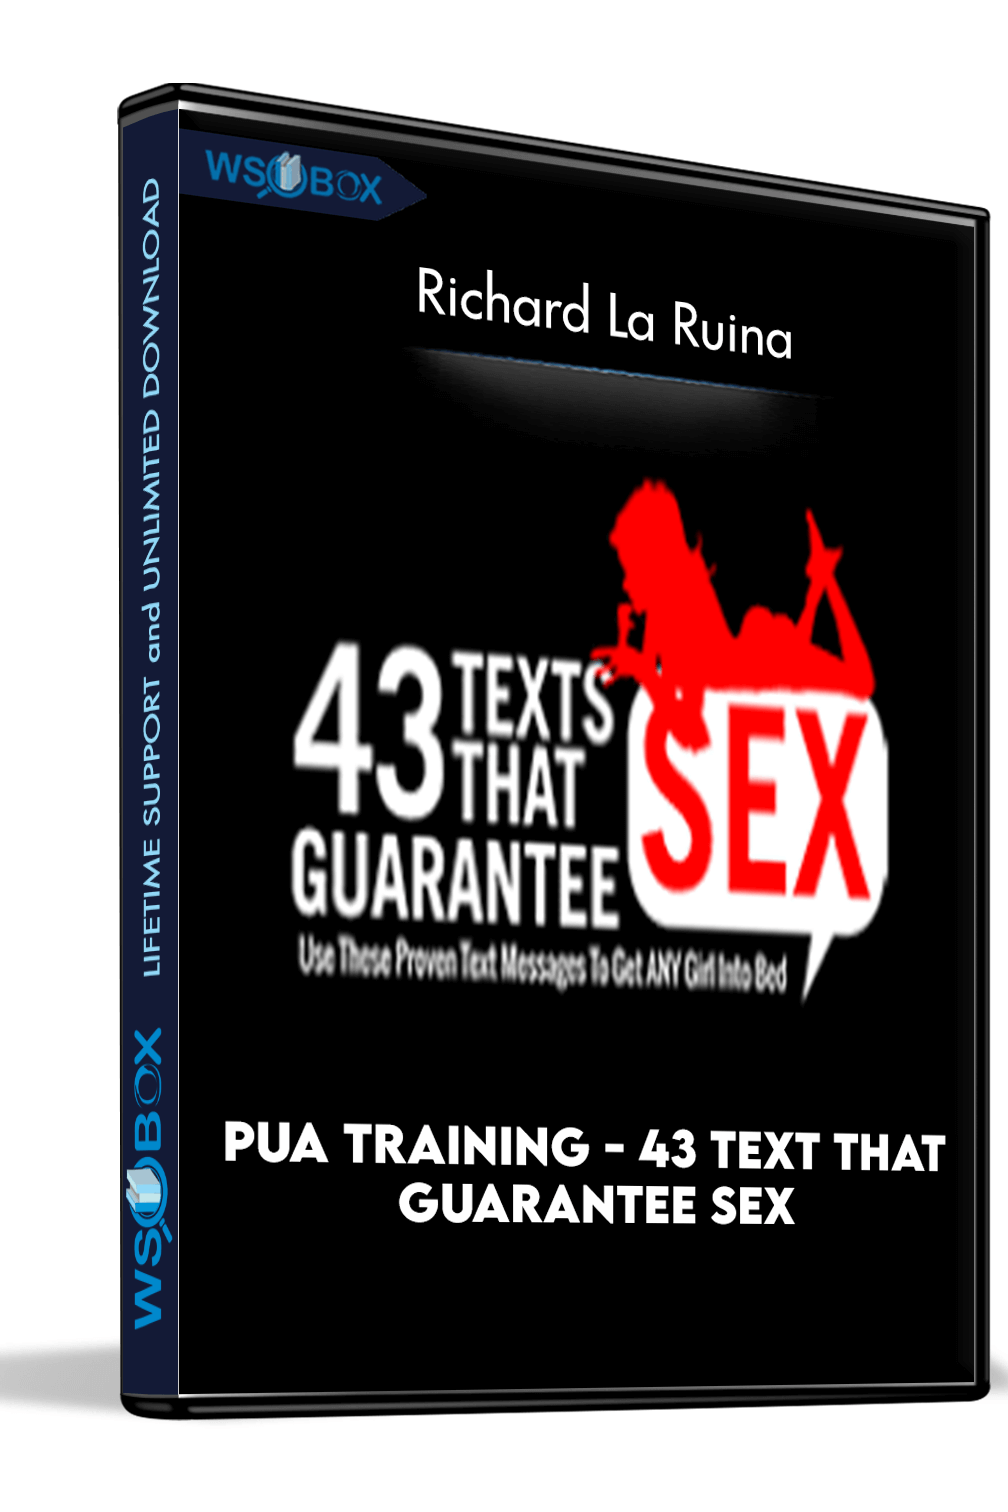 pua-training-43-text-that-guarantee-sex-richard-la-ruina